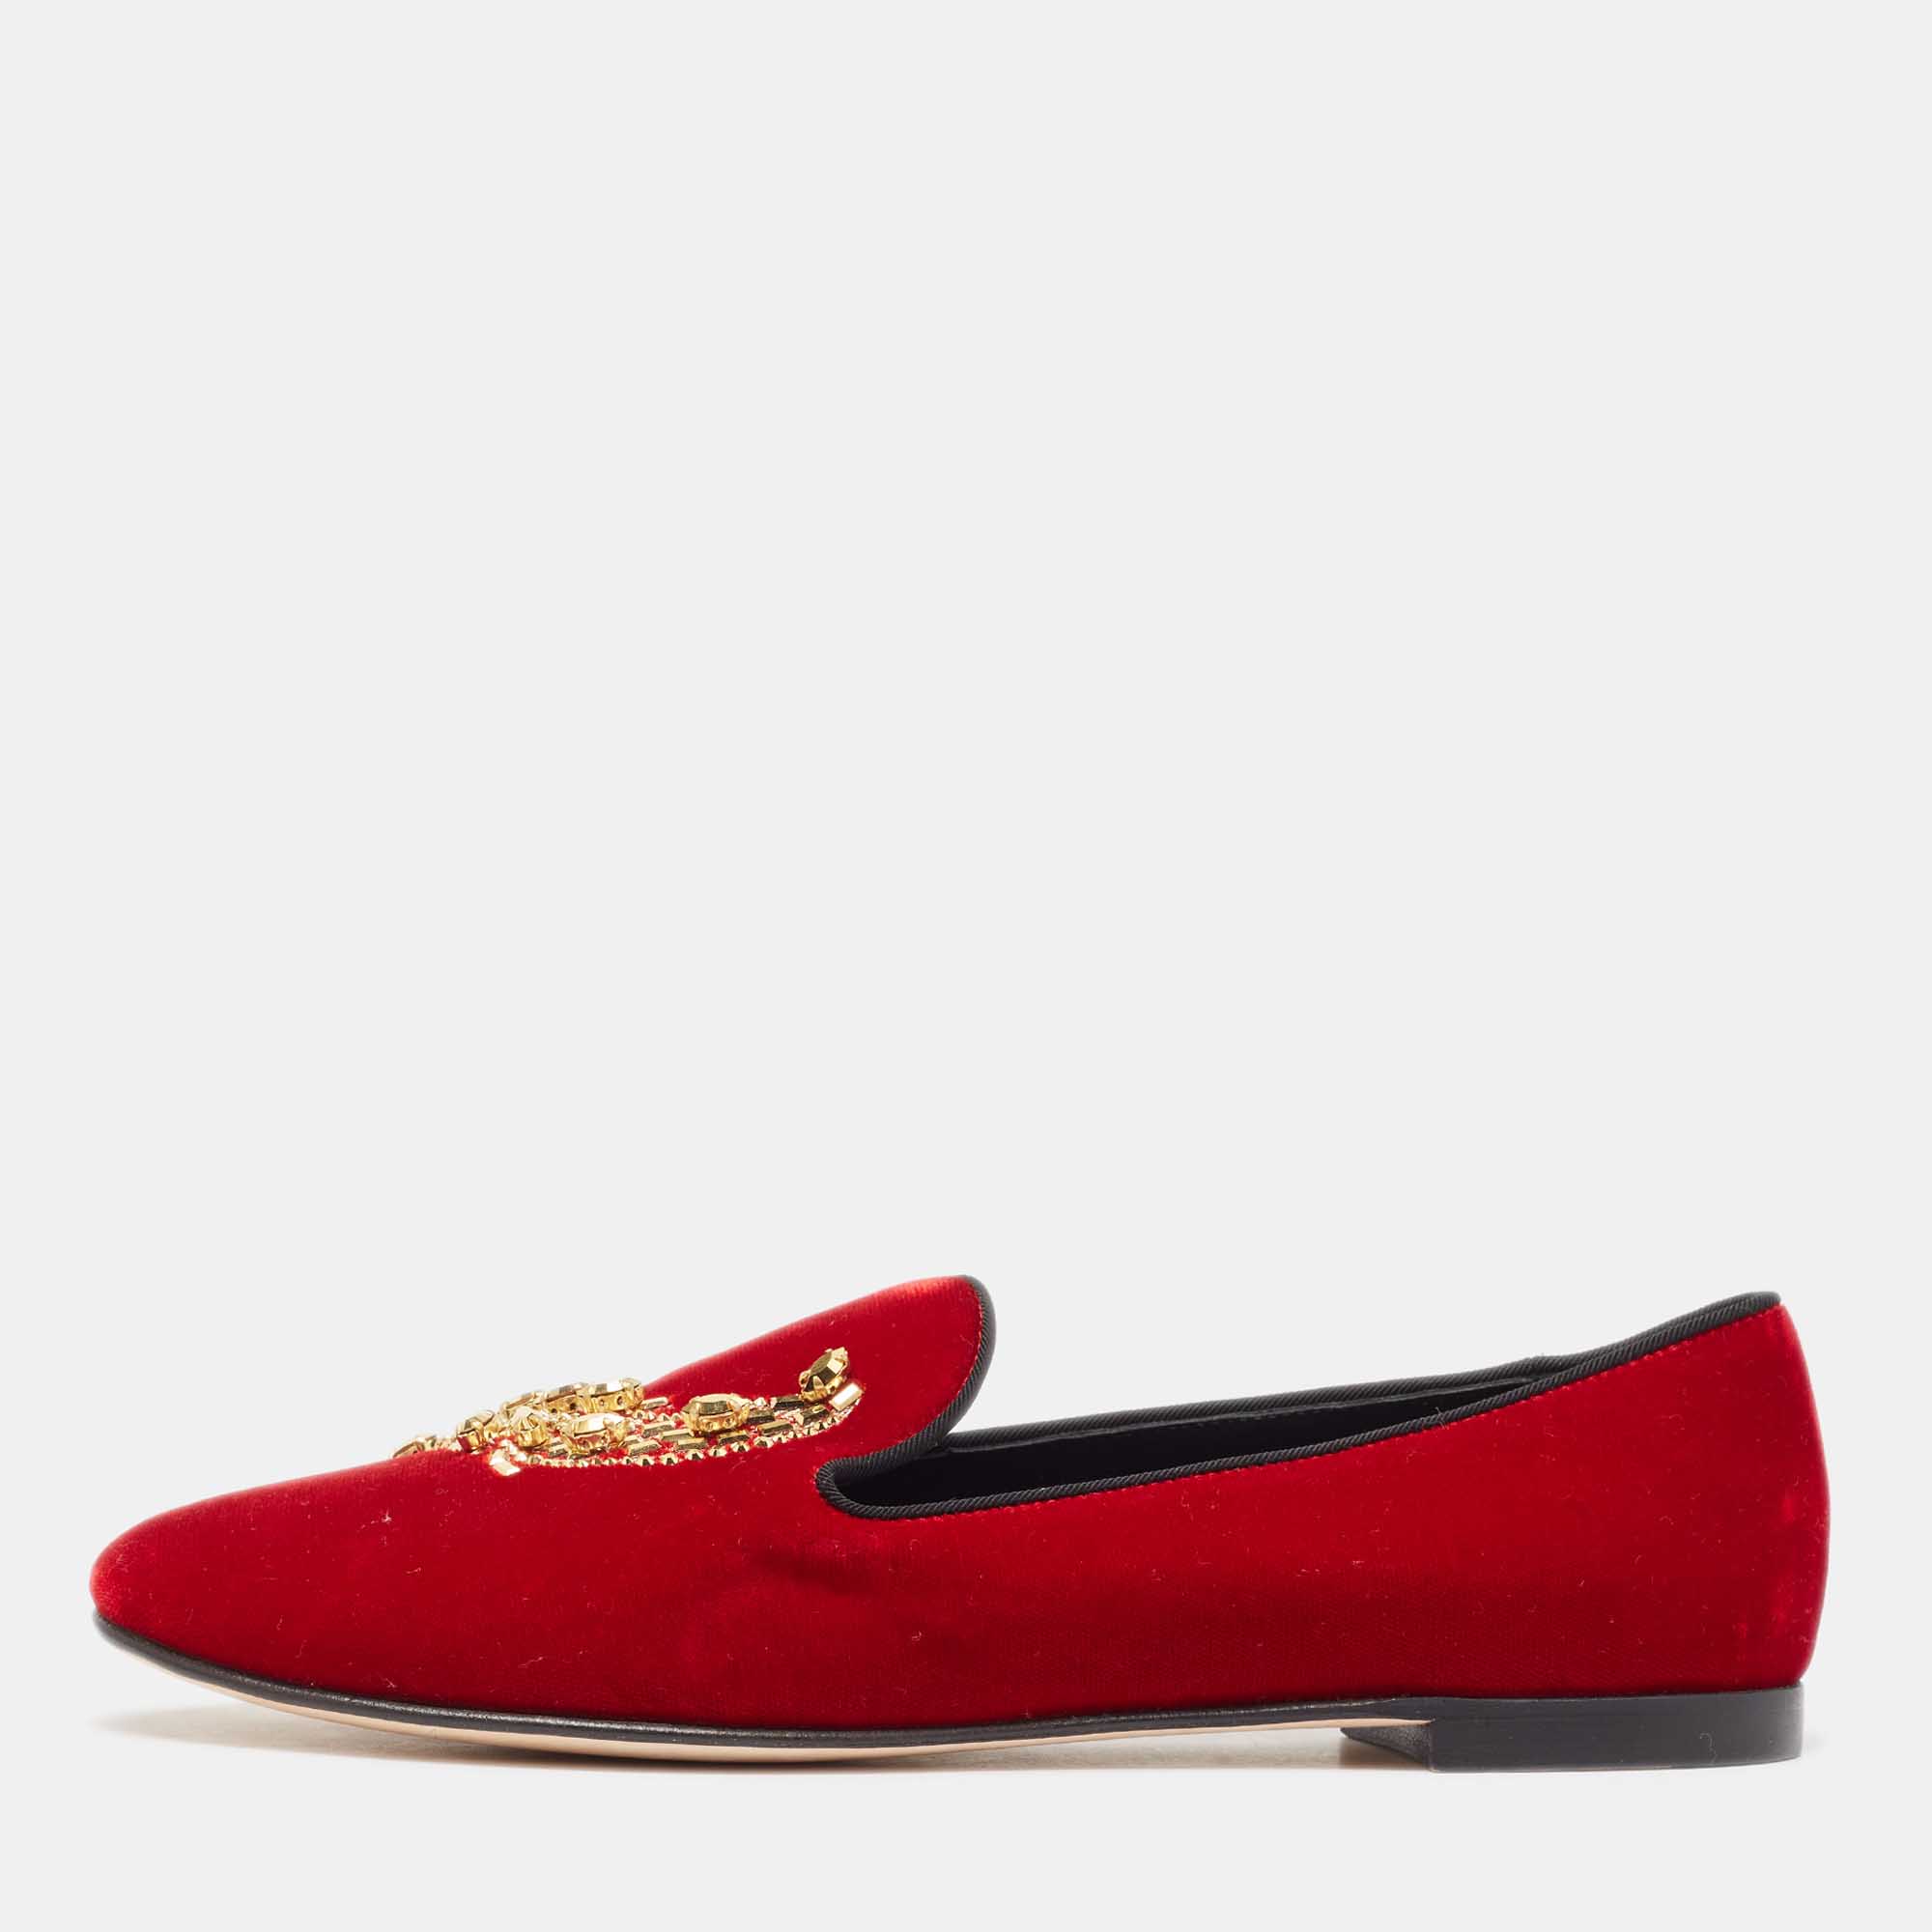 Giuseppe zanotti red velvet crystal embellished smoking slippers size 38